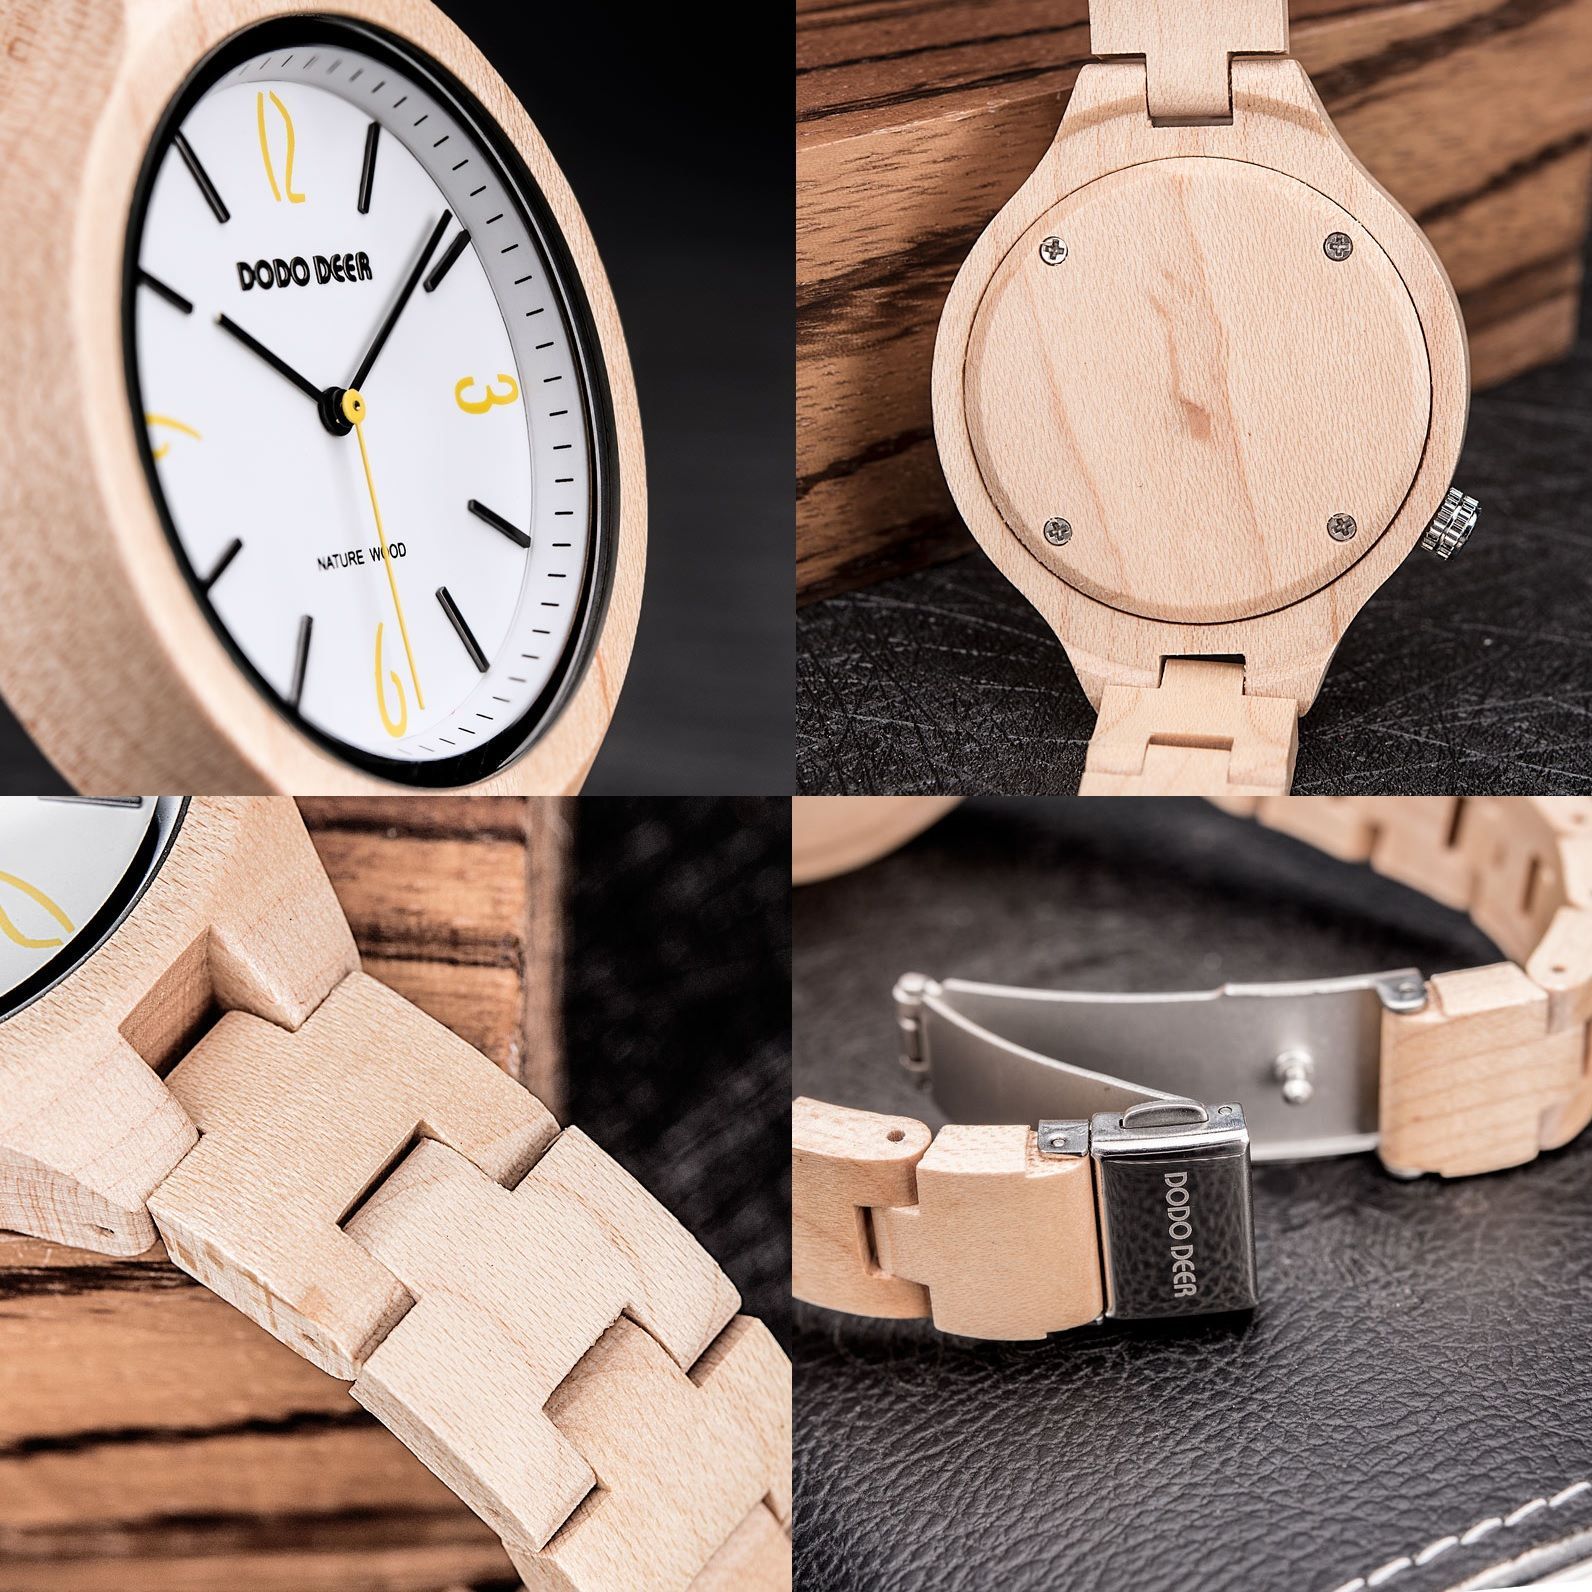 DODO DEER 木製腕時計 日本製クォーツ アナログ ペアウォッチ メンズ